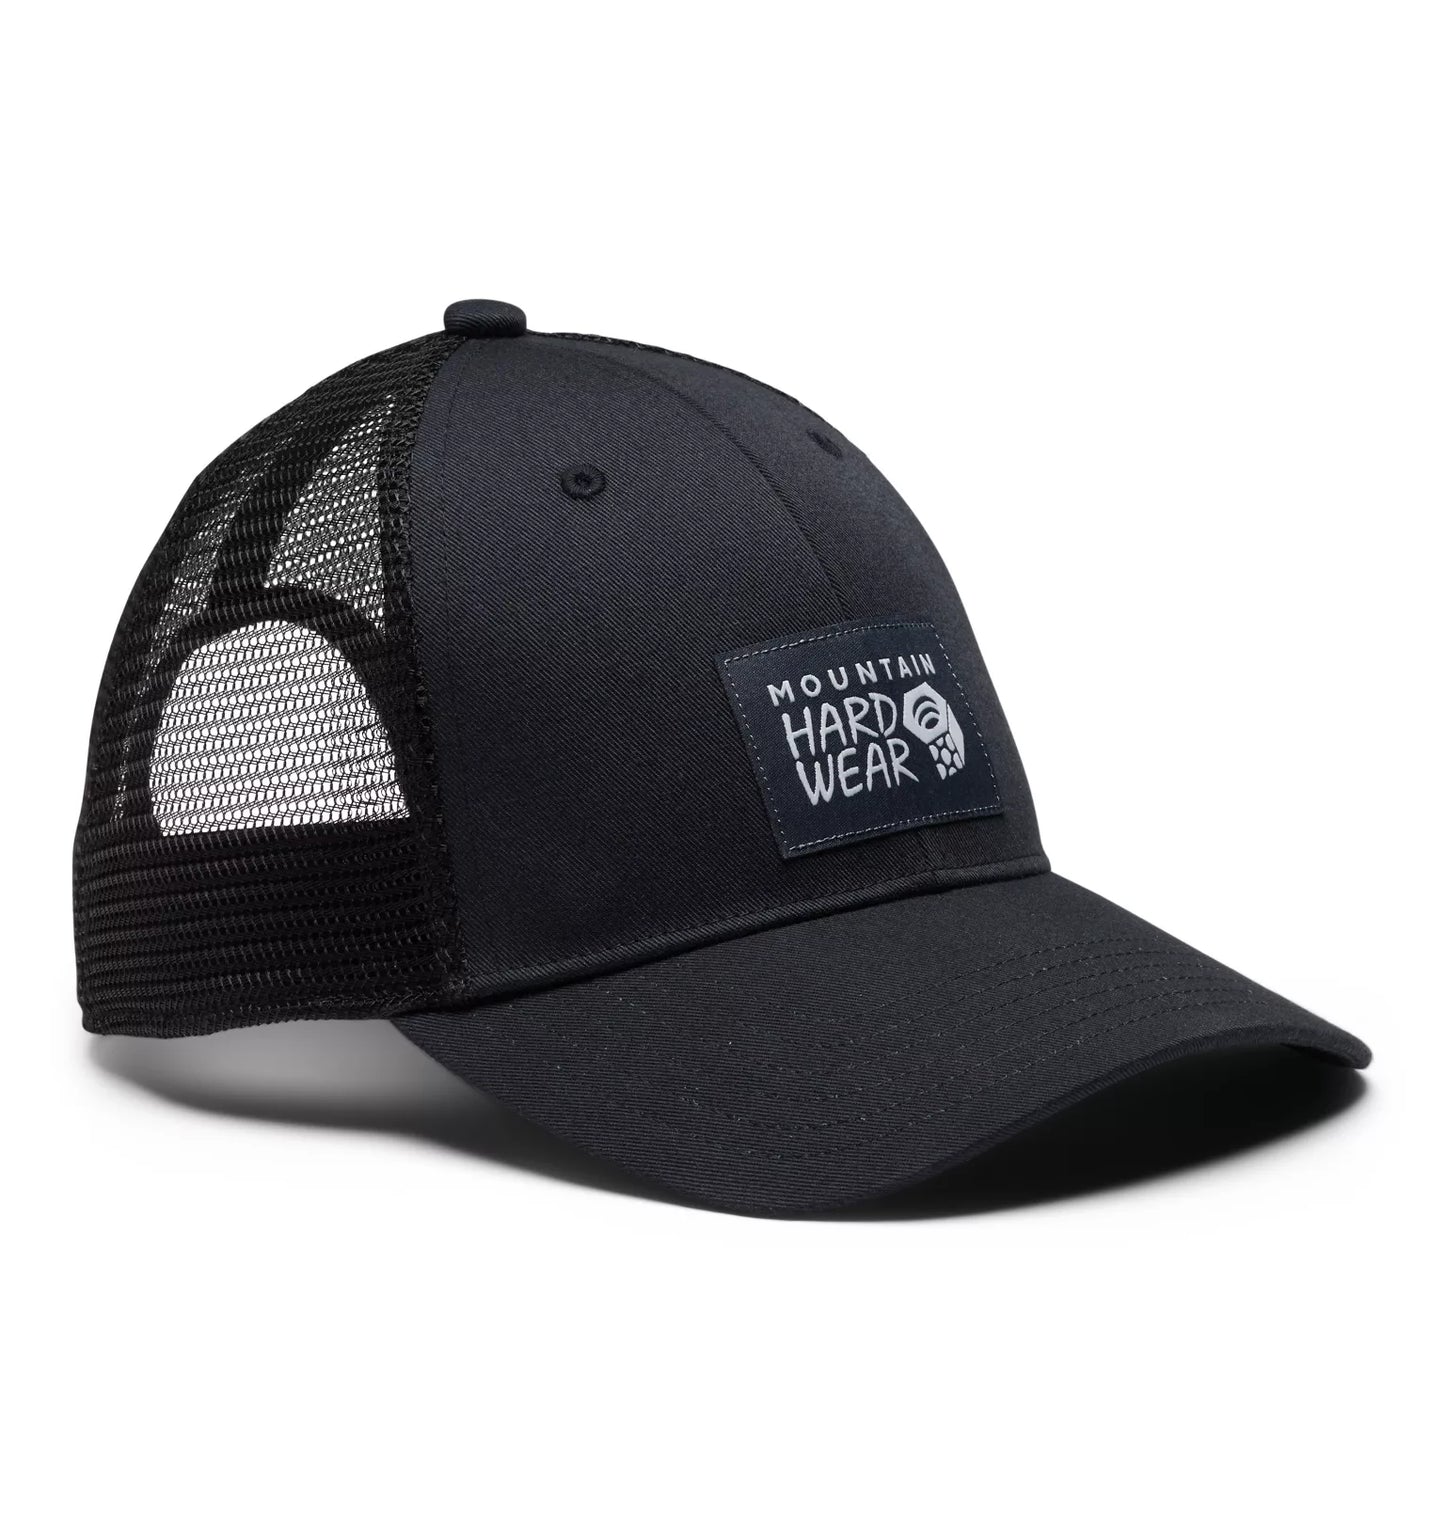 MHW Logo Trucker Hat